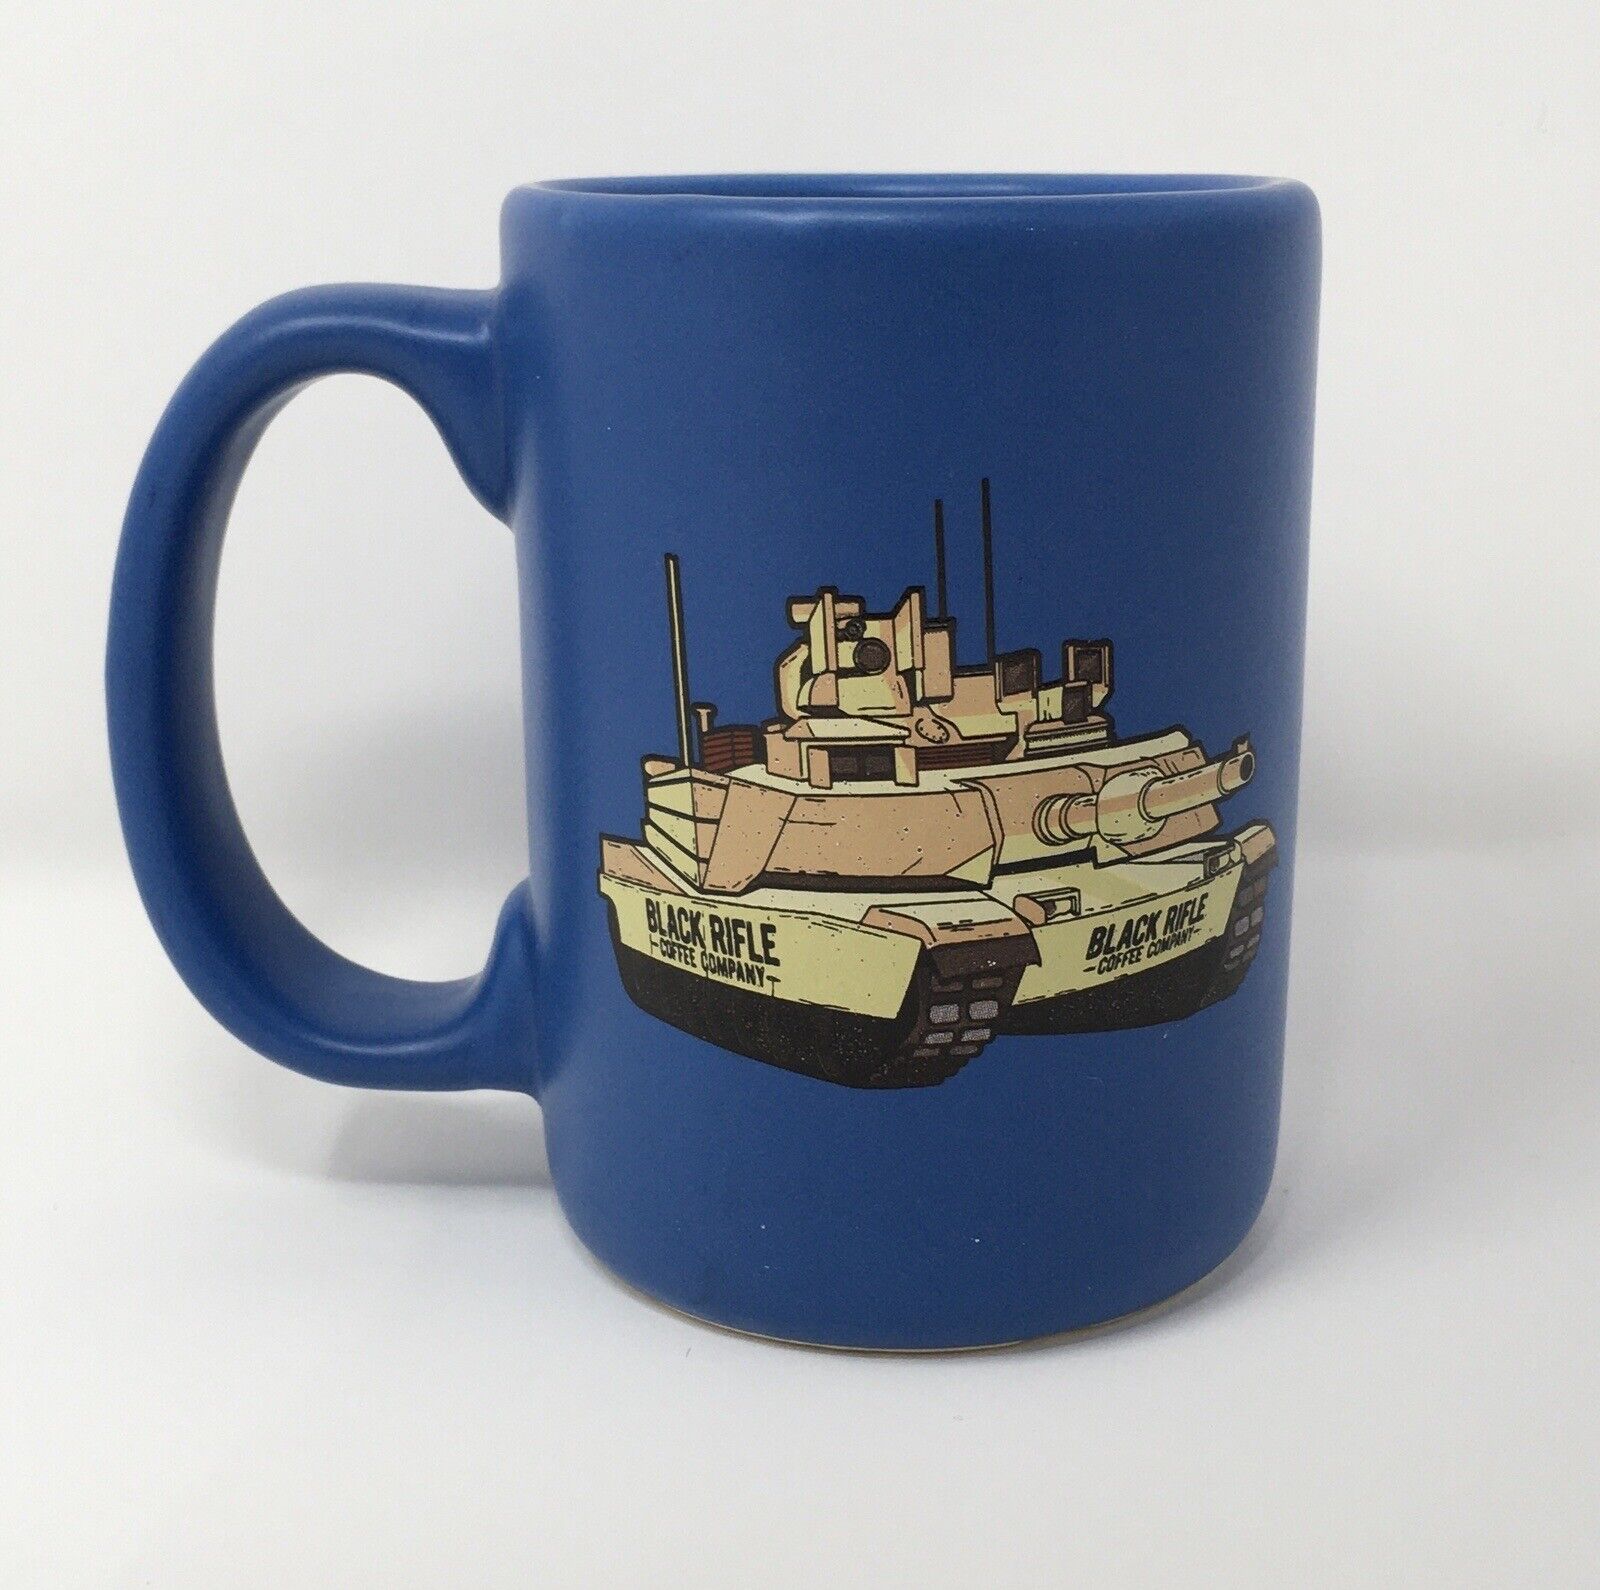 Black Rifle Coffee Company Mug Blue With Tank And Logo Made in USA